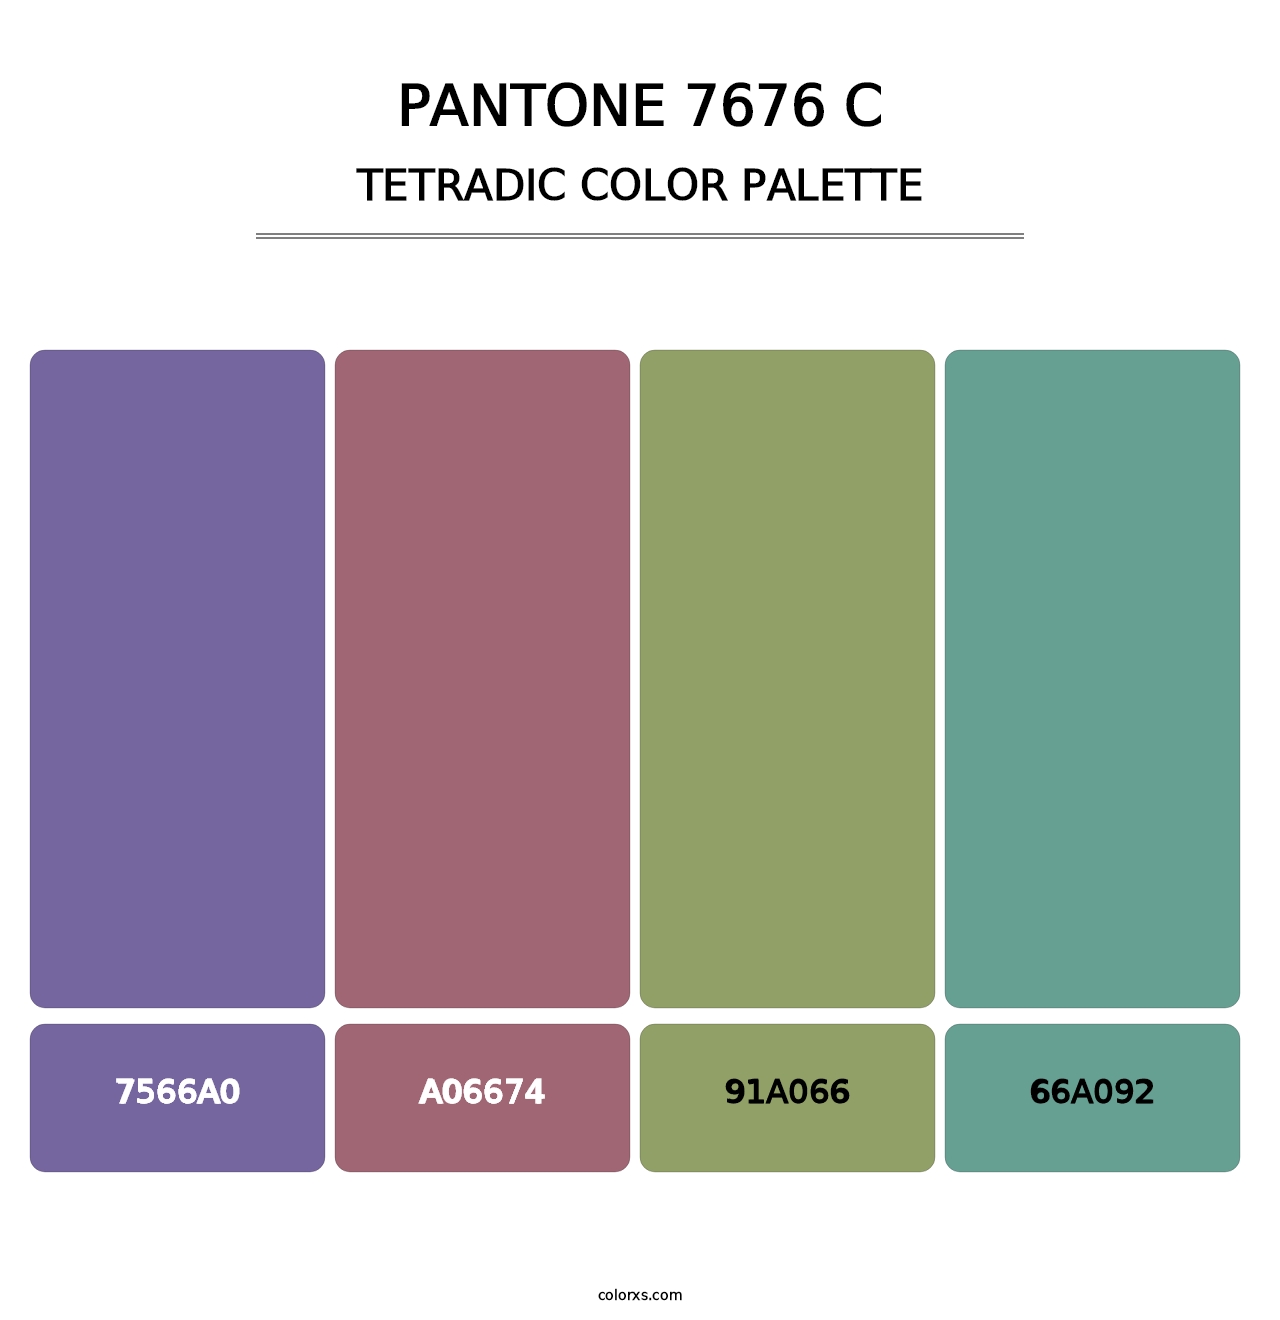 PANTONE 7676 C - Tetradic Color Palette